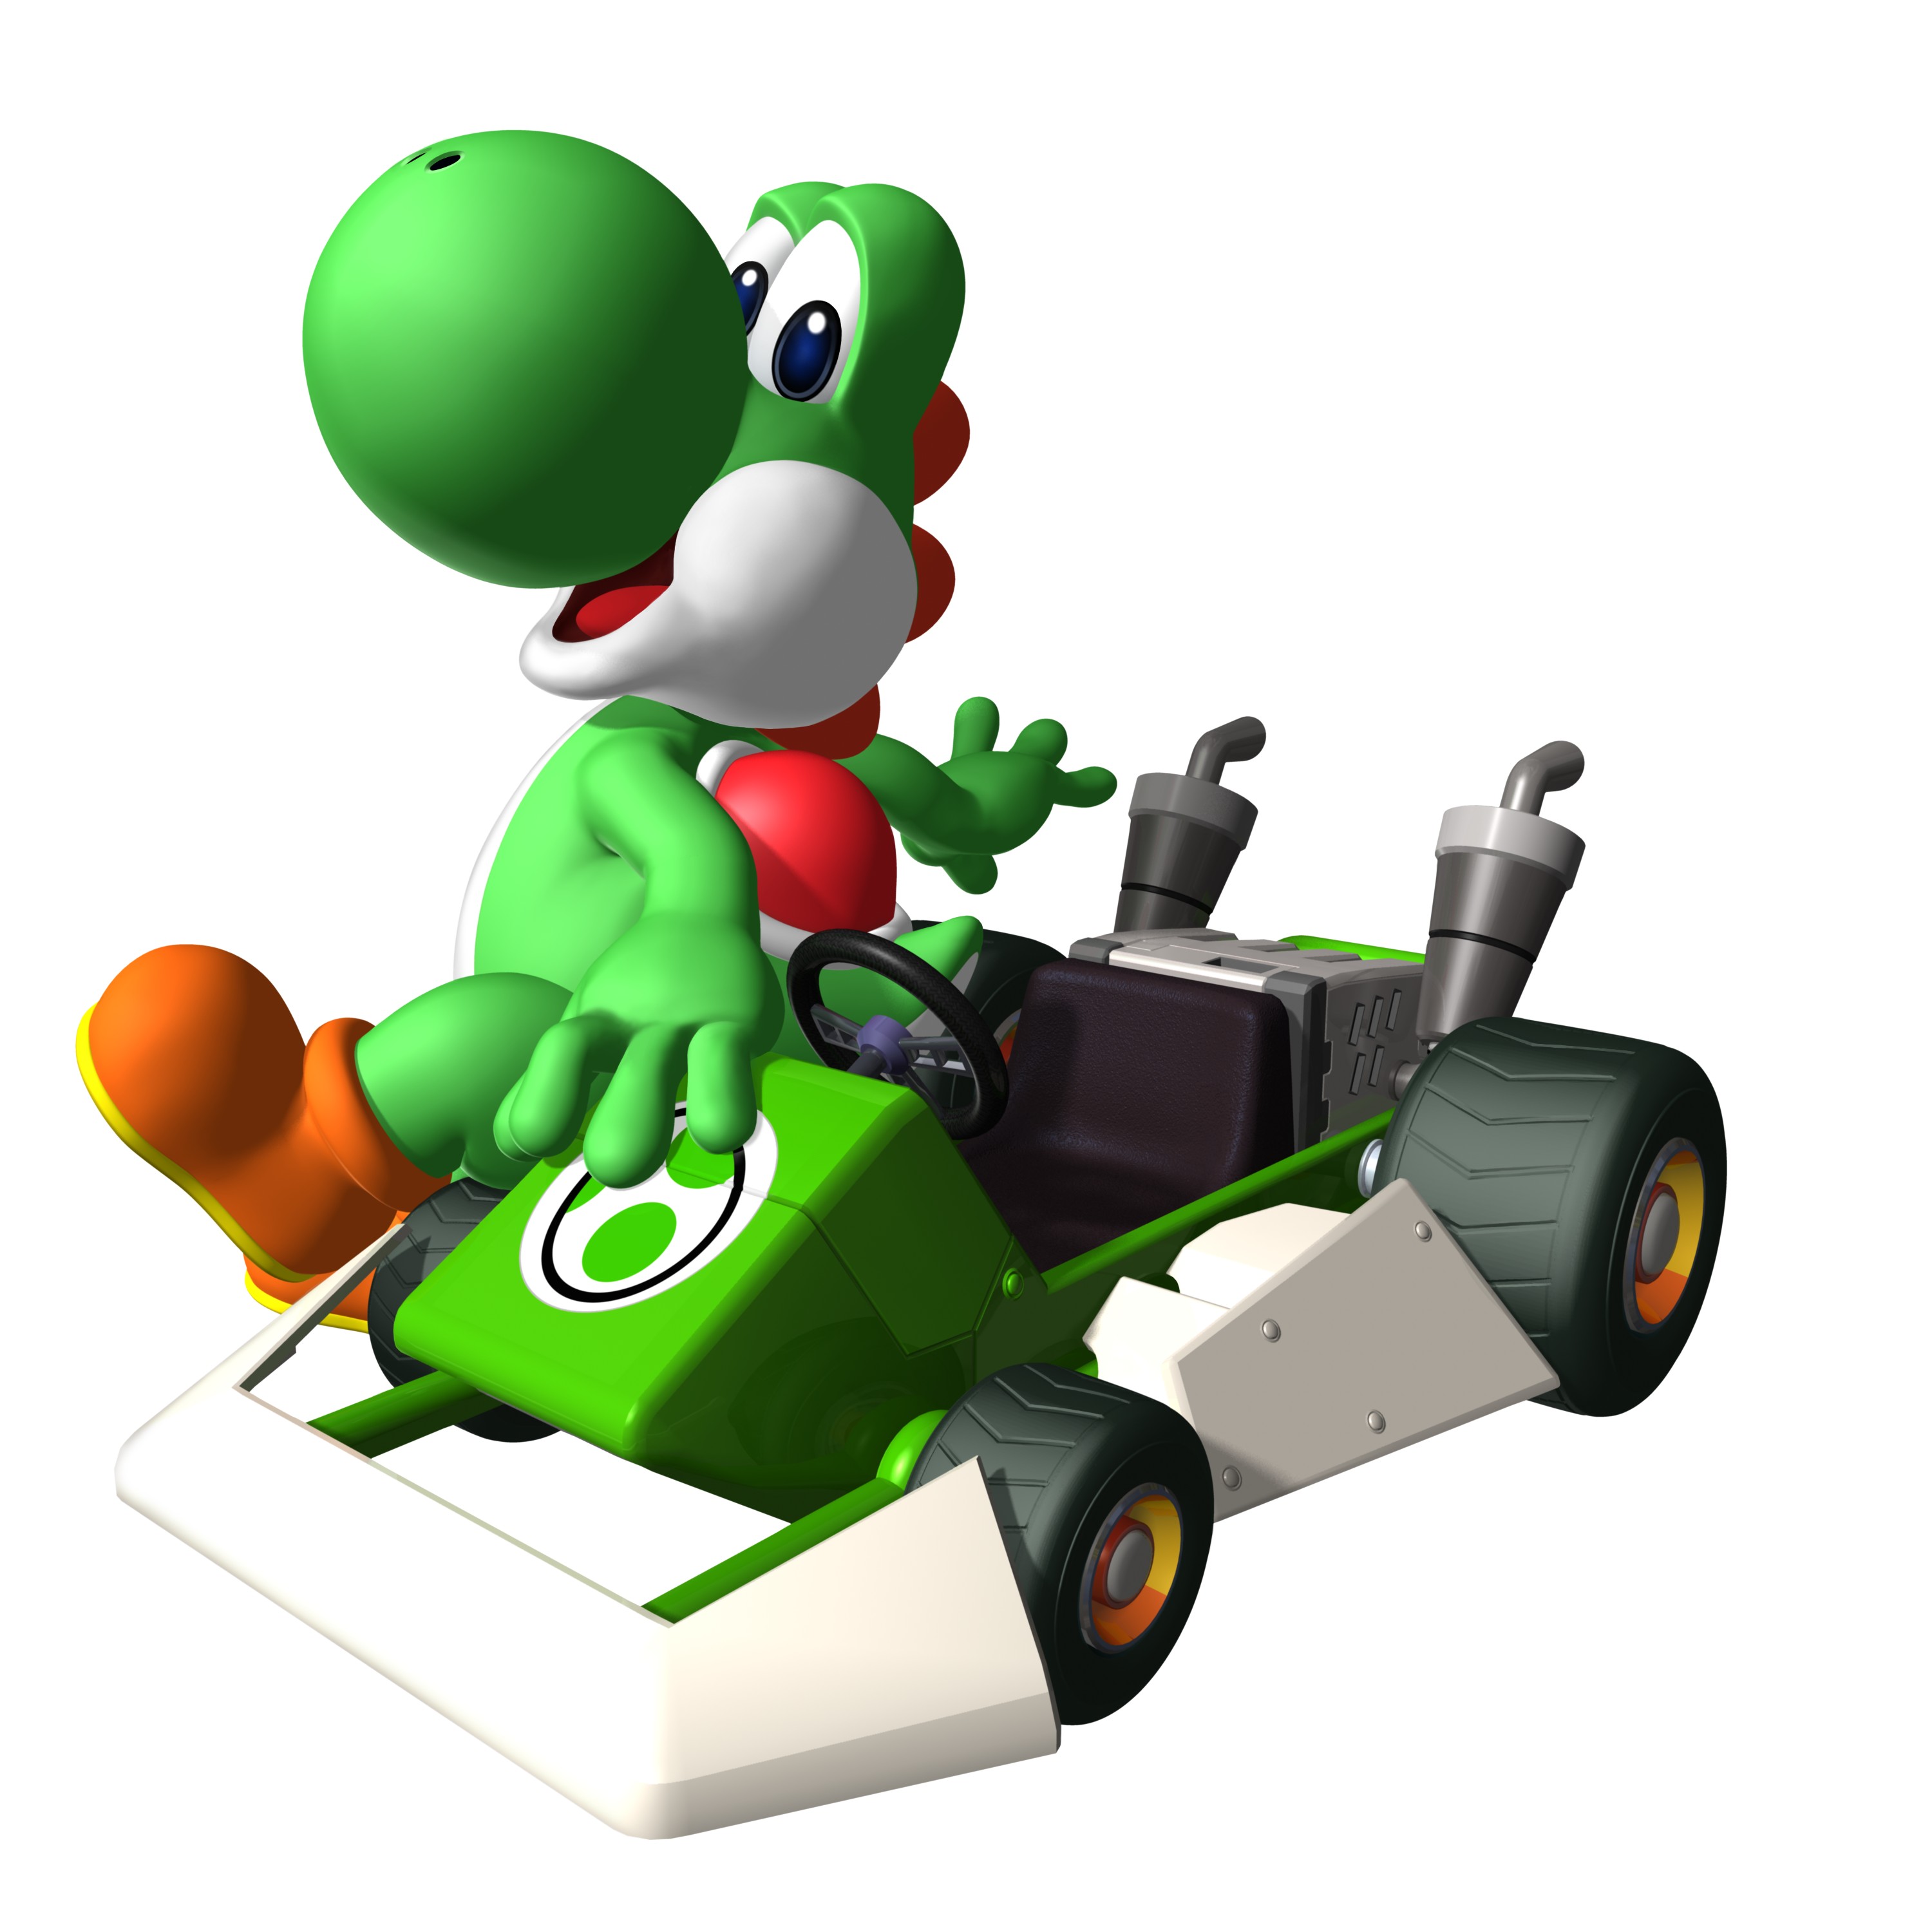 Image - Standard YS.jpg - The Mario Kart Racing Wiki - Mario Kart ...